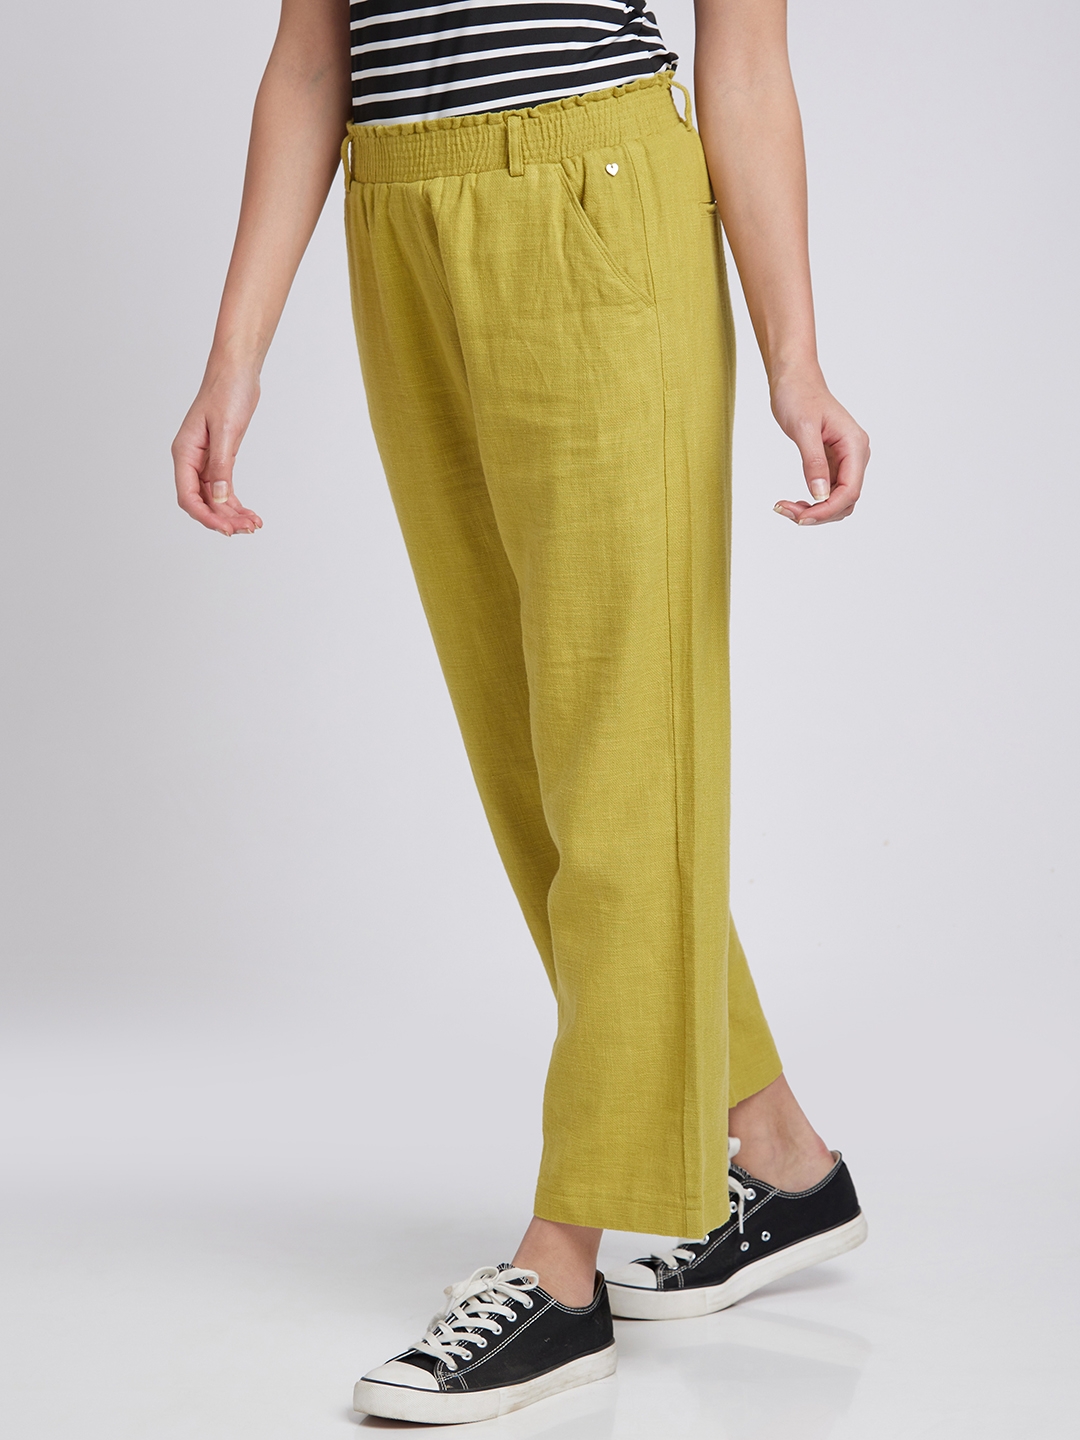 spykar | Women's Yellow Linen Solid Trousers 3